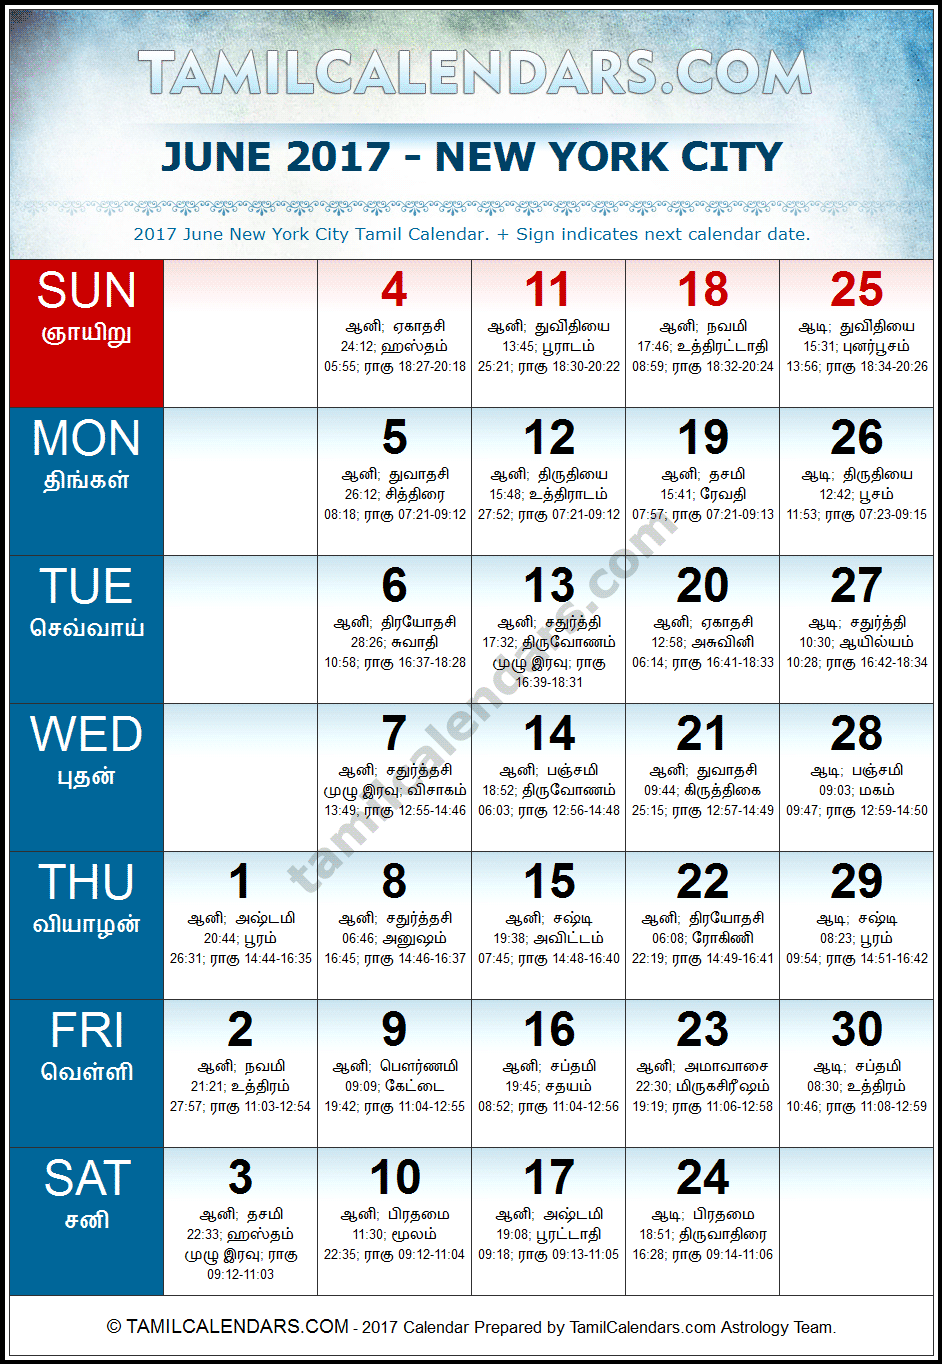 June 2017 Tamil Calendar for New York, USA